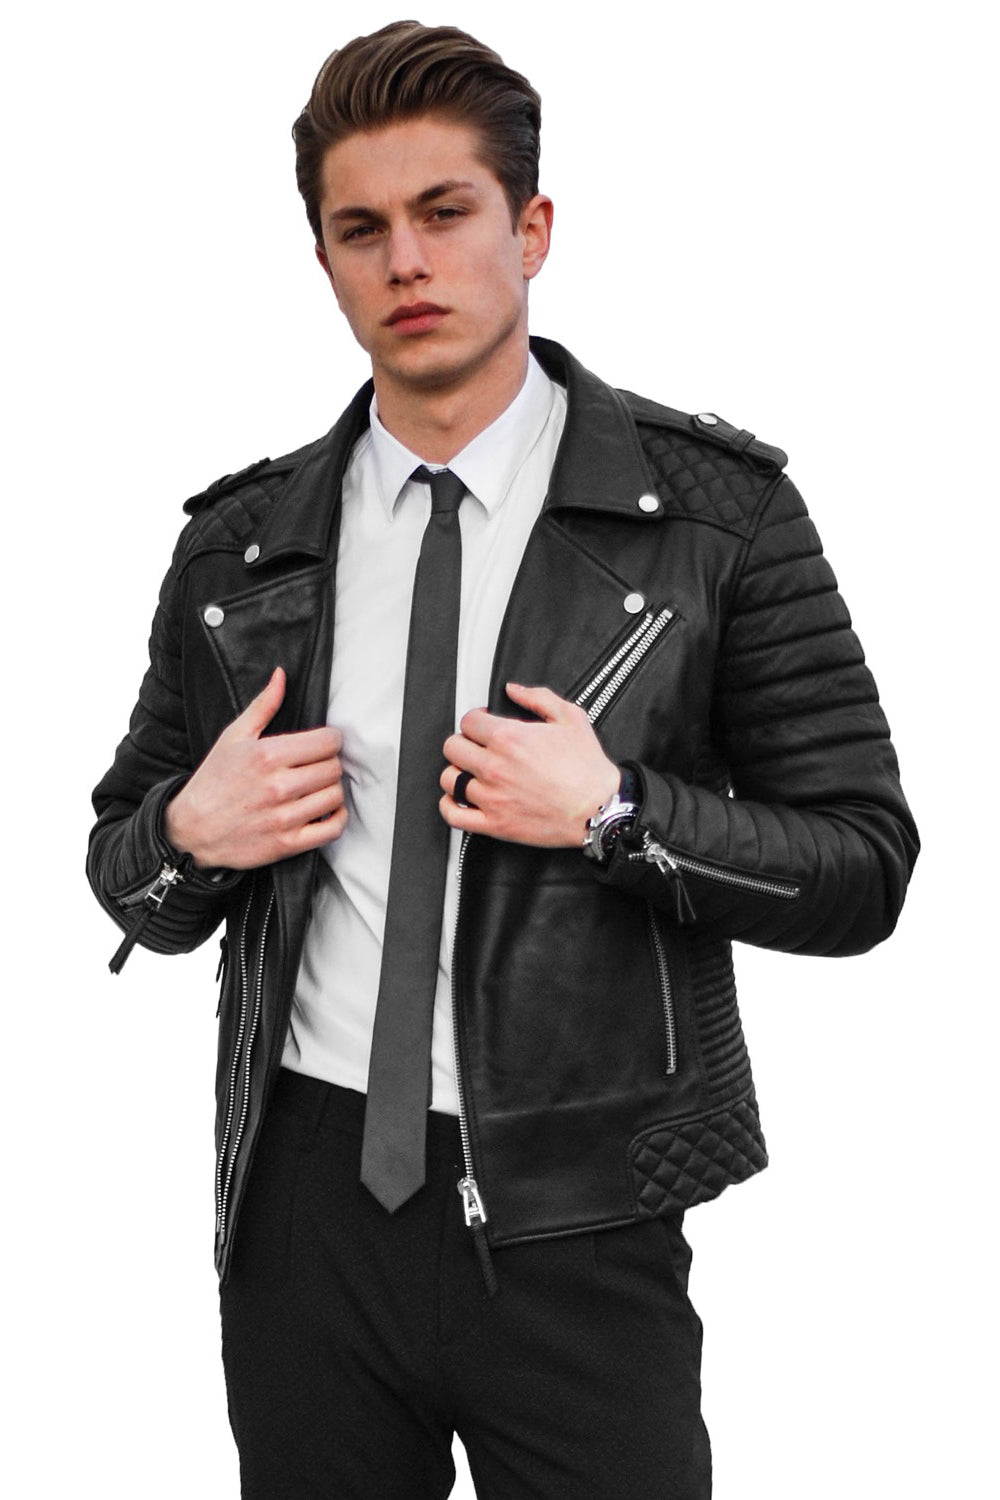 Men Genuine Leather Jacket 01 SkinOutfit